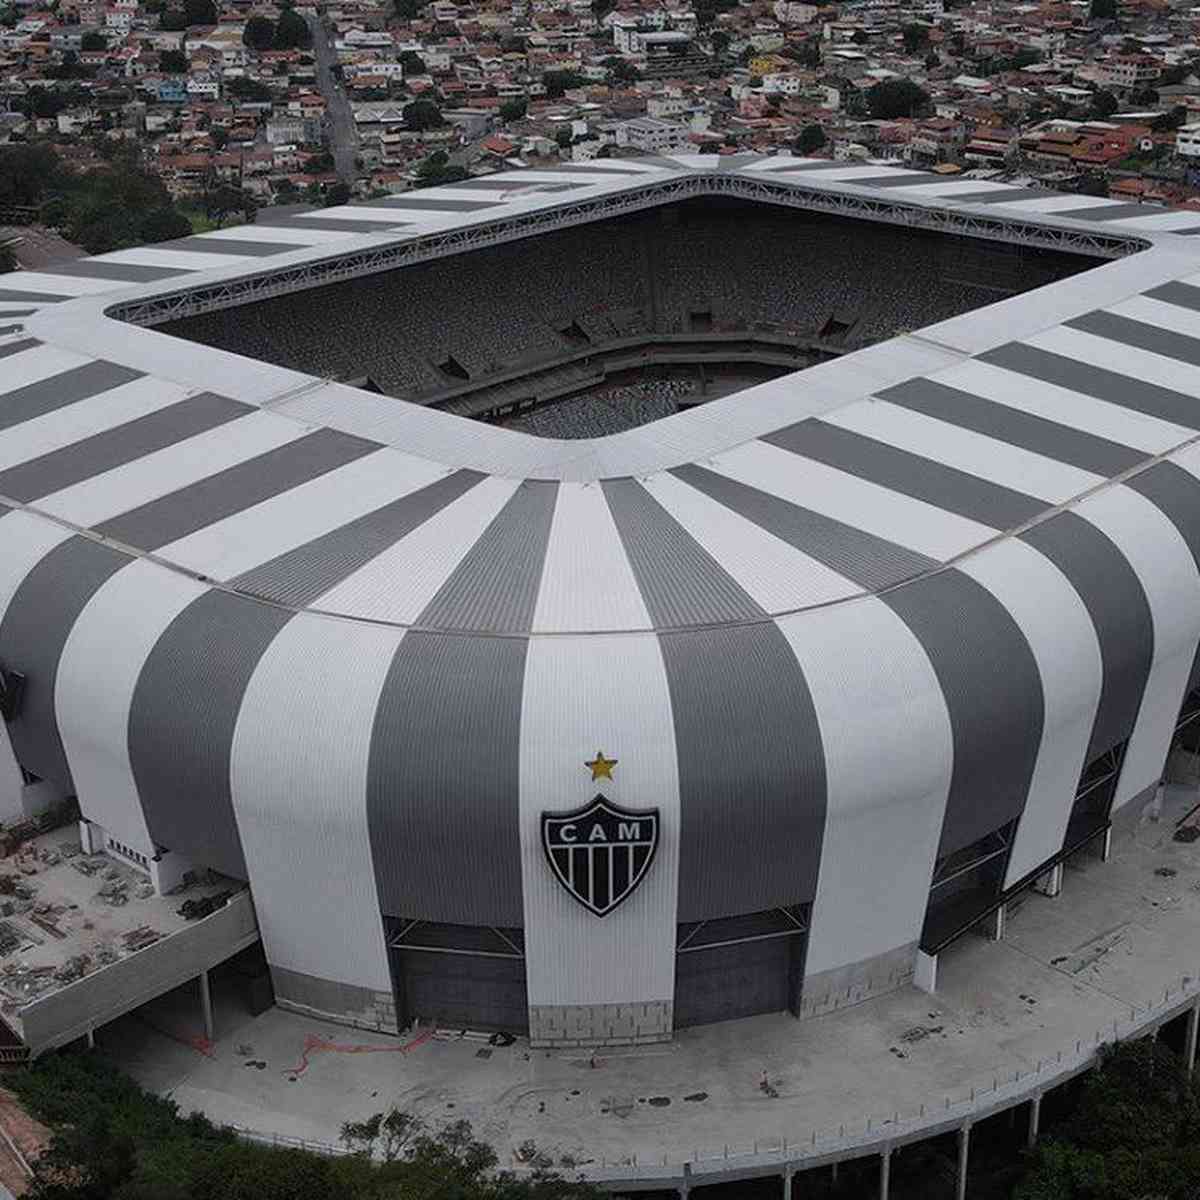 Reabertura dos Clubes - Clube Belo Horizonte